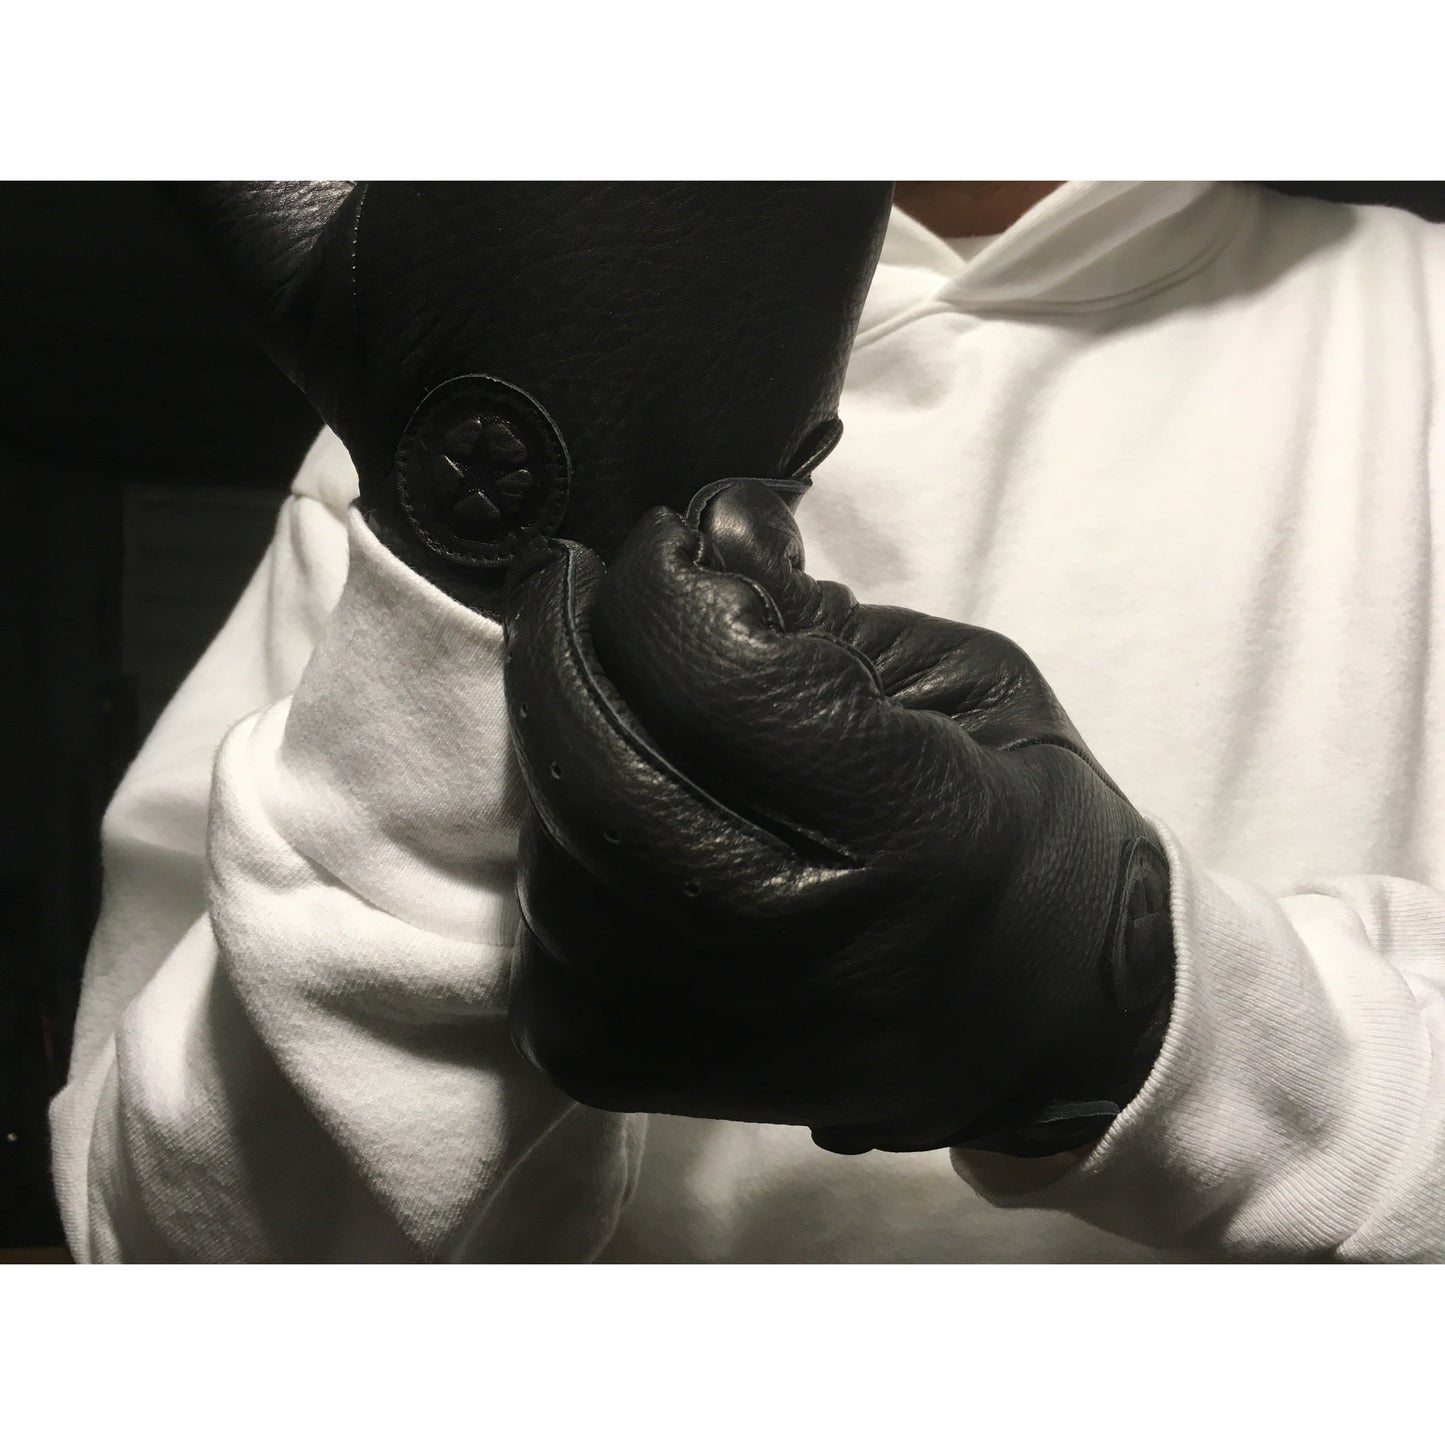 William Leather Gloves, Black